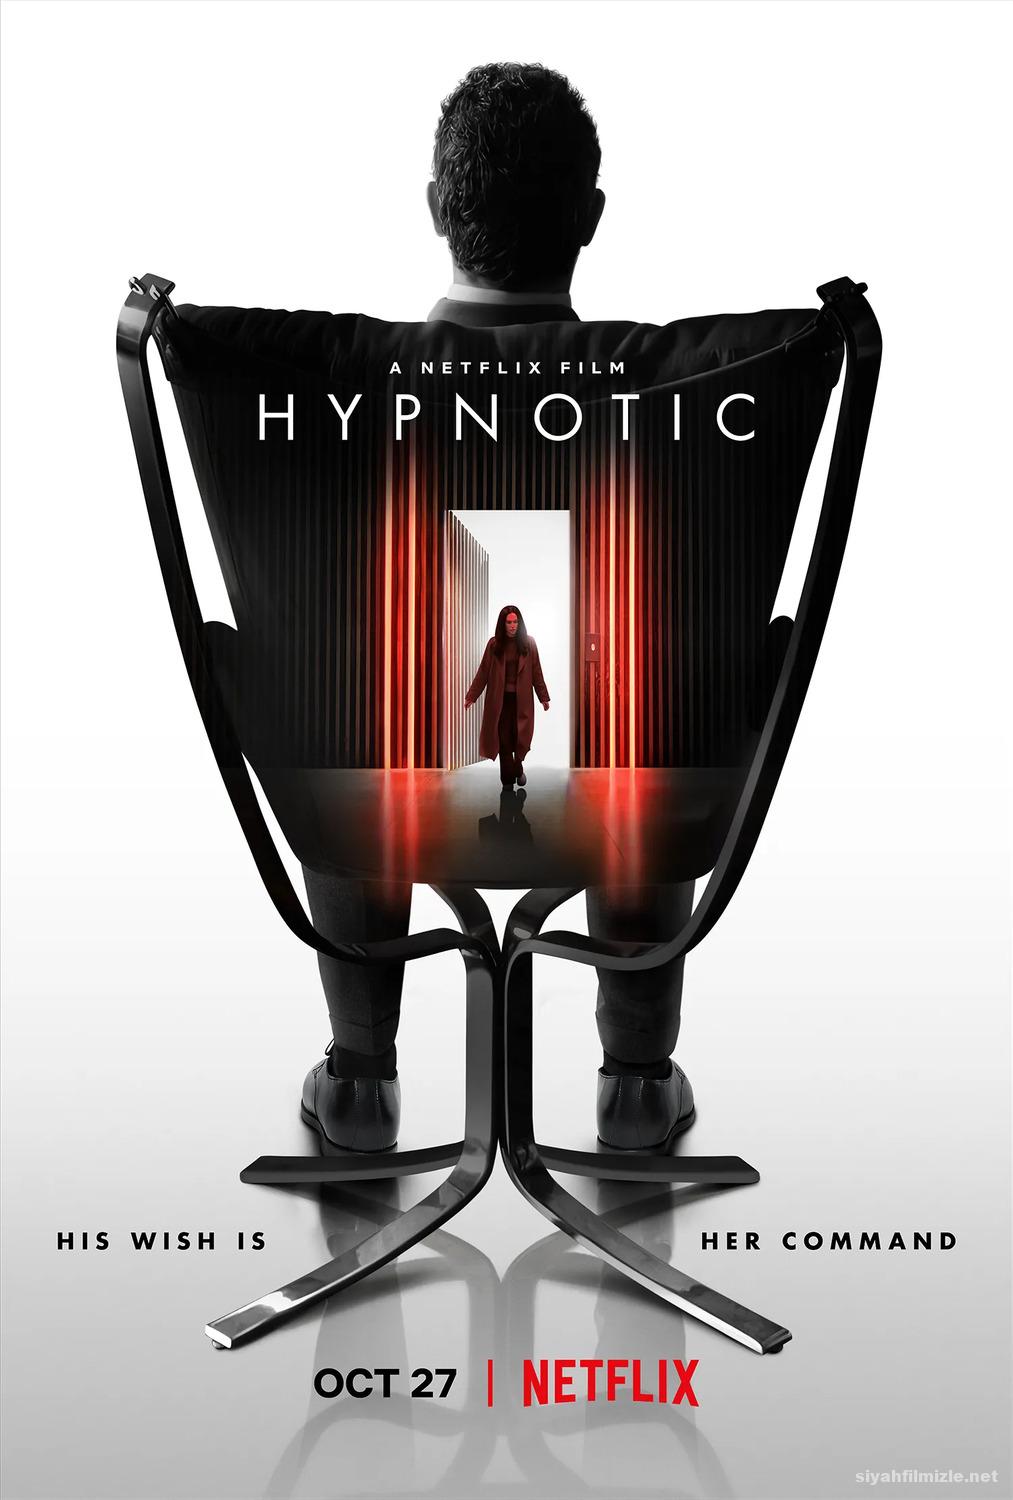 Hipnotizma (Hypnotic) 2021 Filmi Türkçe Dublaj Full izle